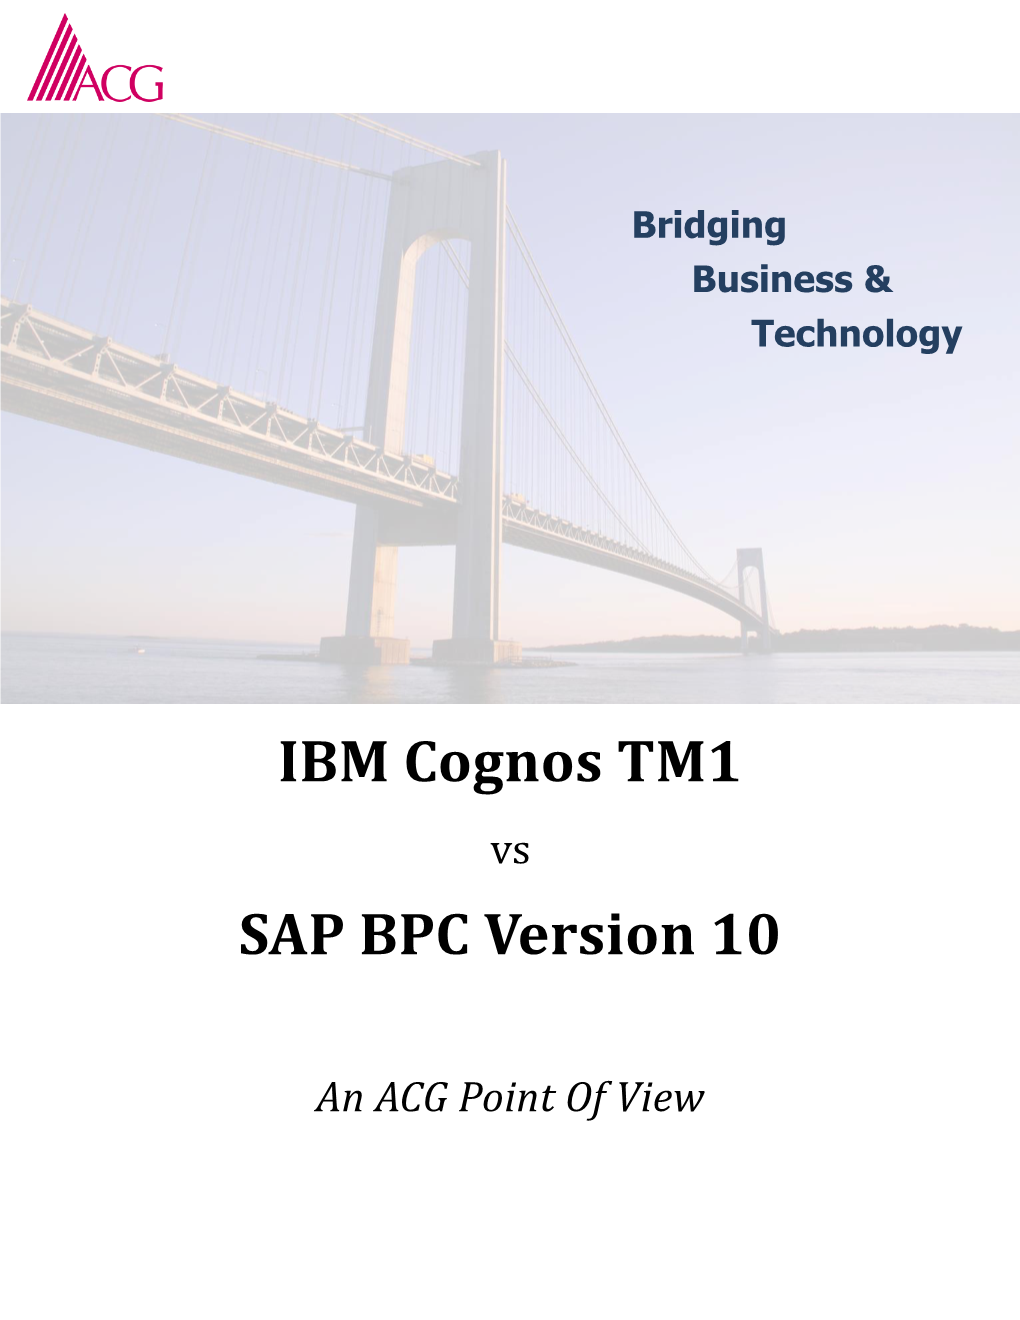 IBM Cognos TM1 SAP BPC Version 10